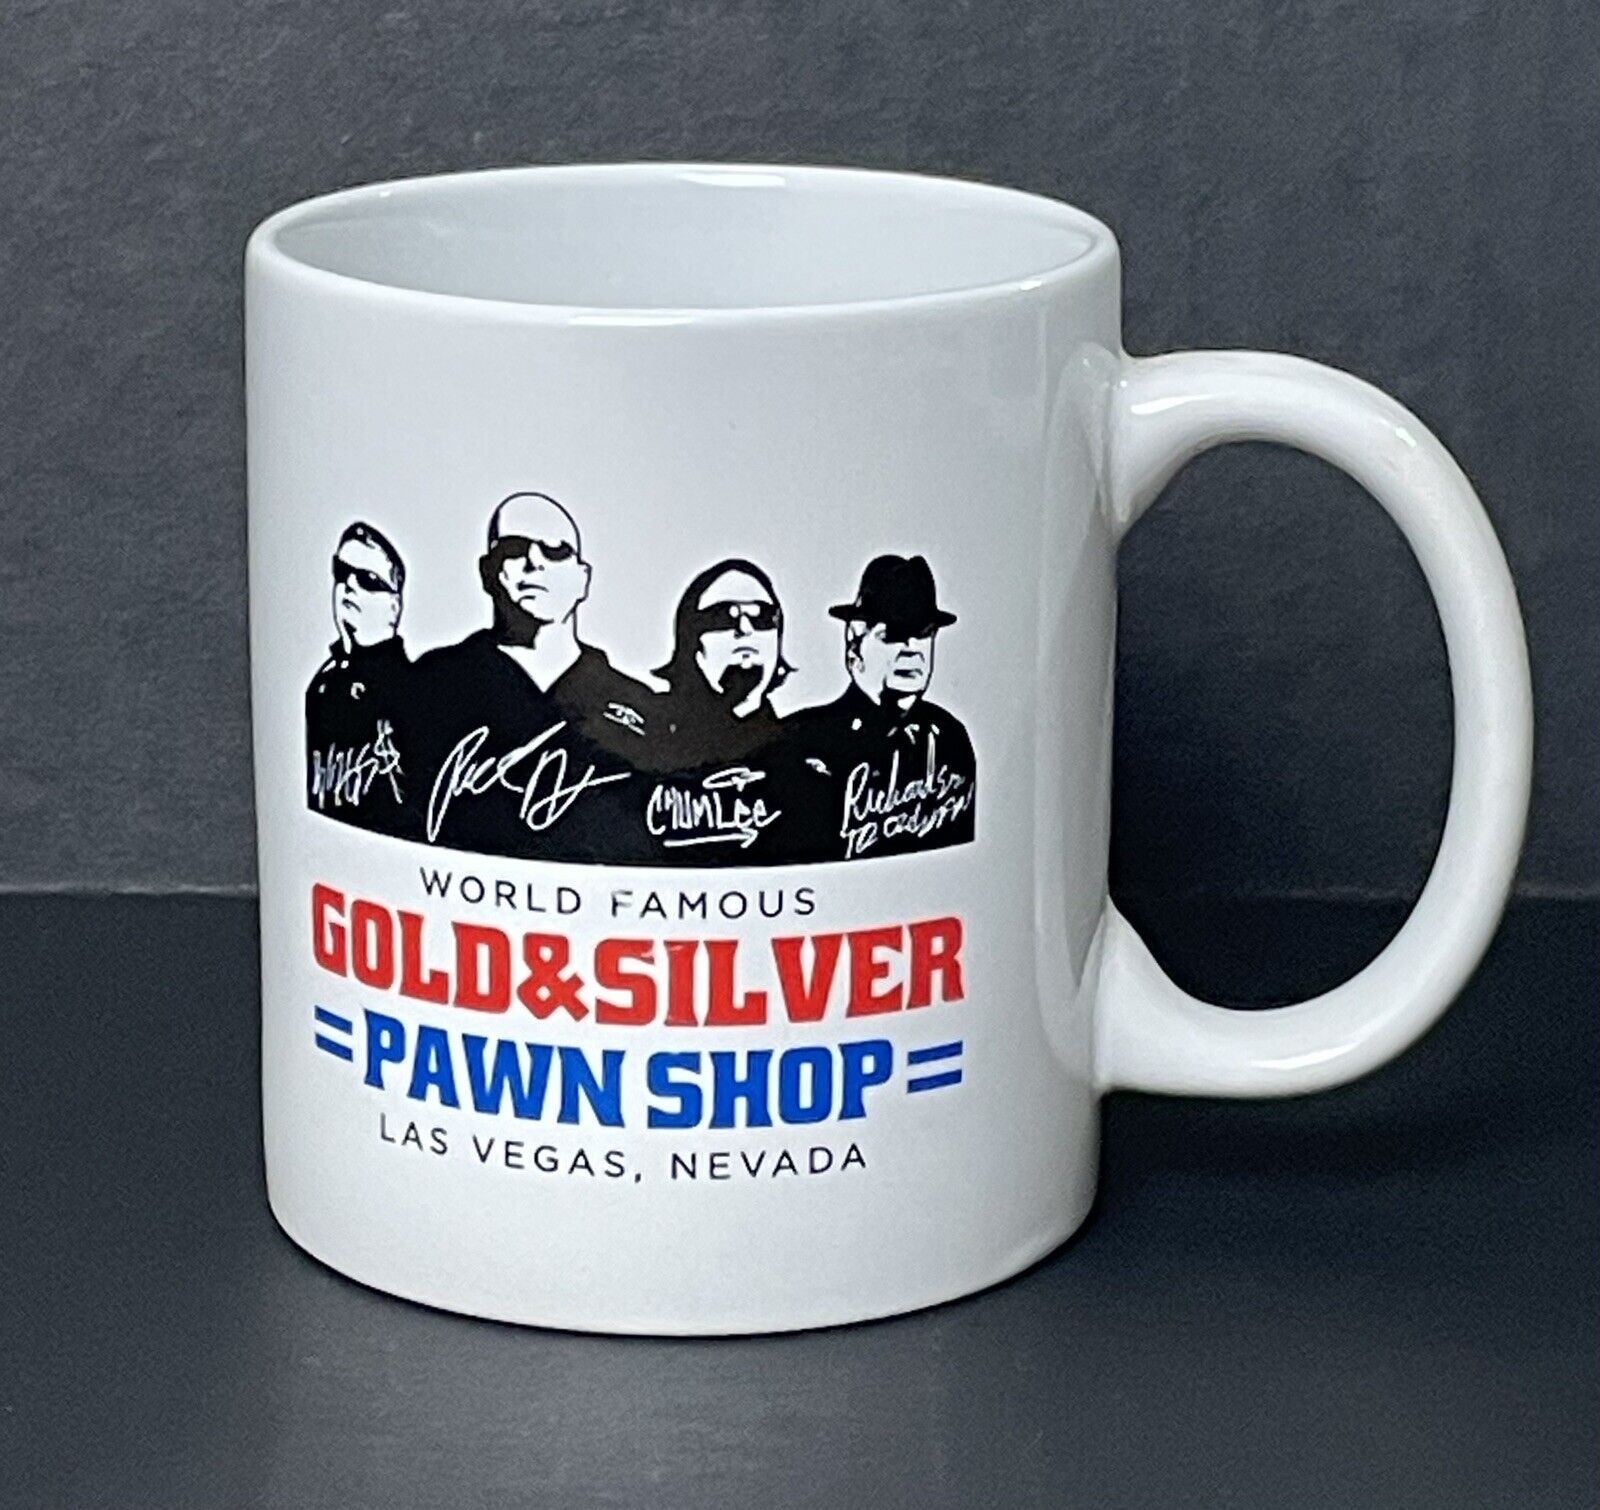 World Famous Gold & Silver Pawn Stars Shop Mug - Old Man, Rick, Chumlee, Corey